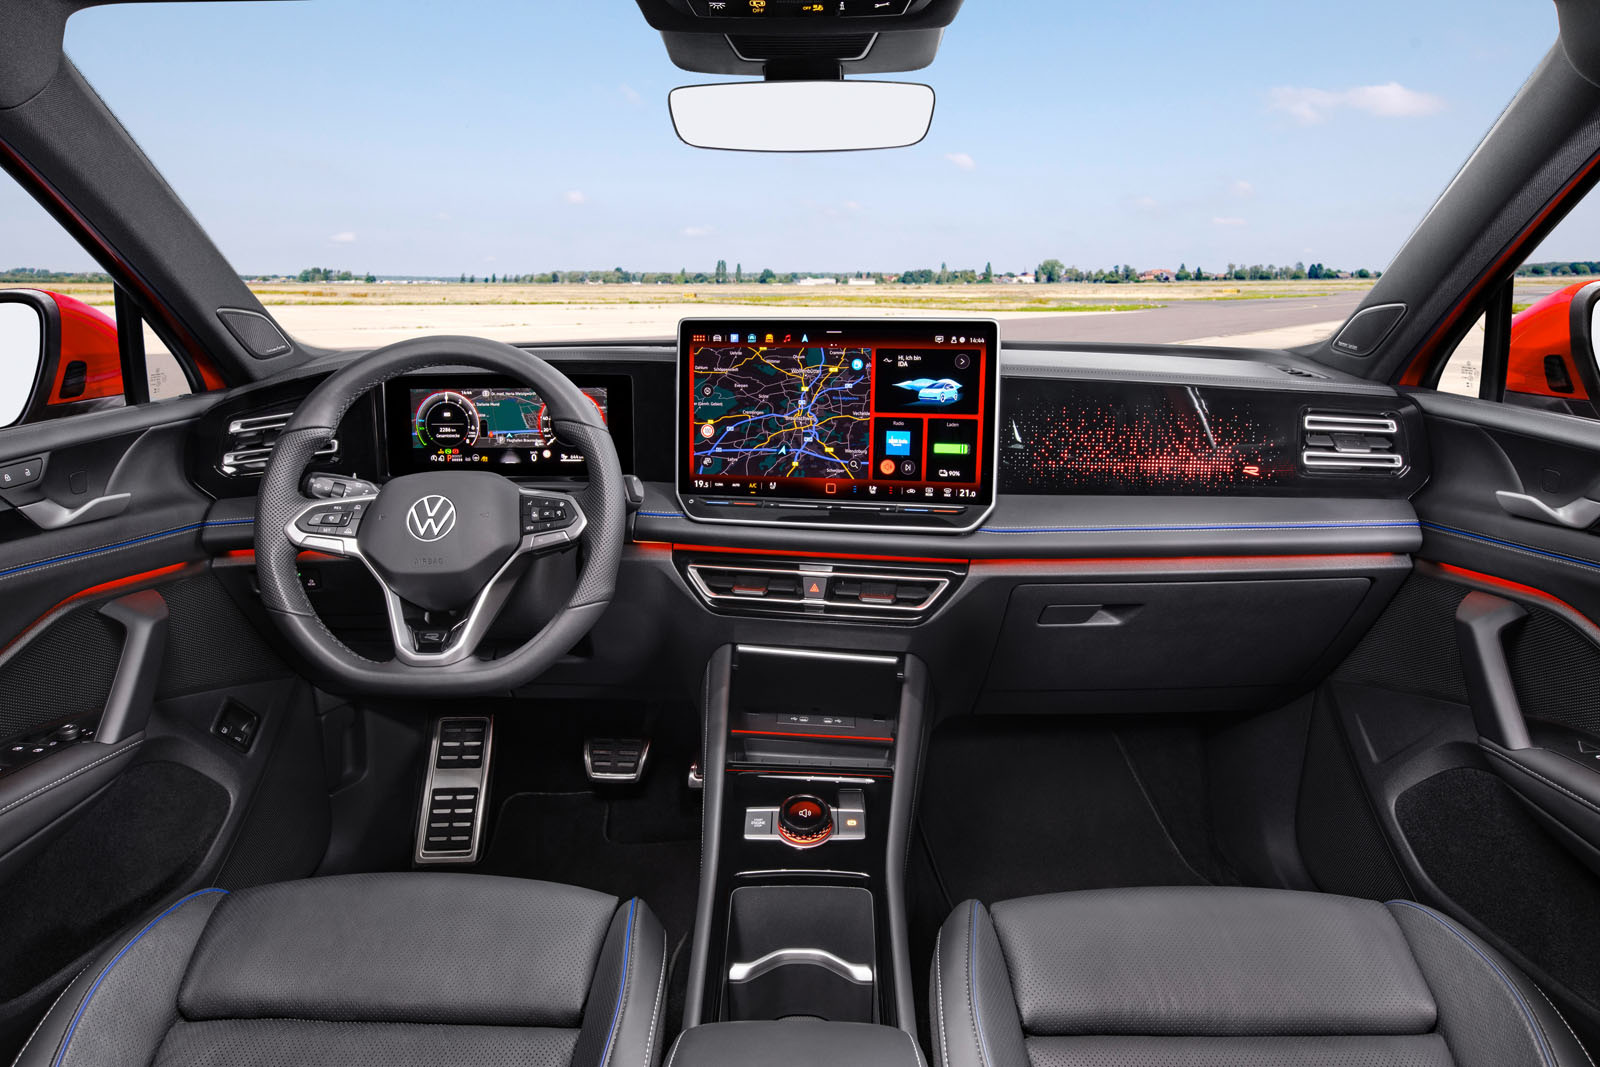 Used Volkswagen Tiguan (Mk2, 2016-date) review